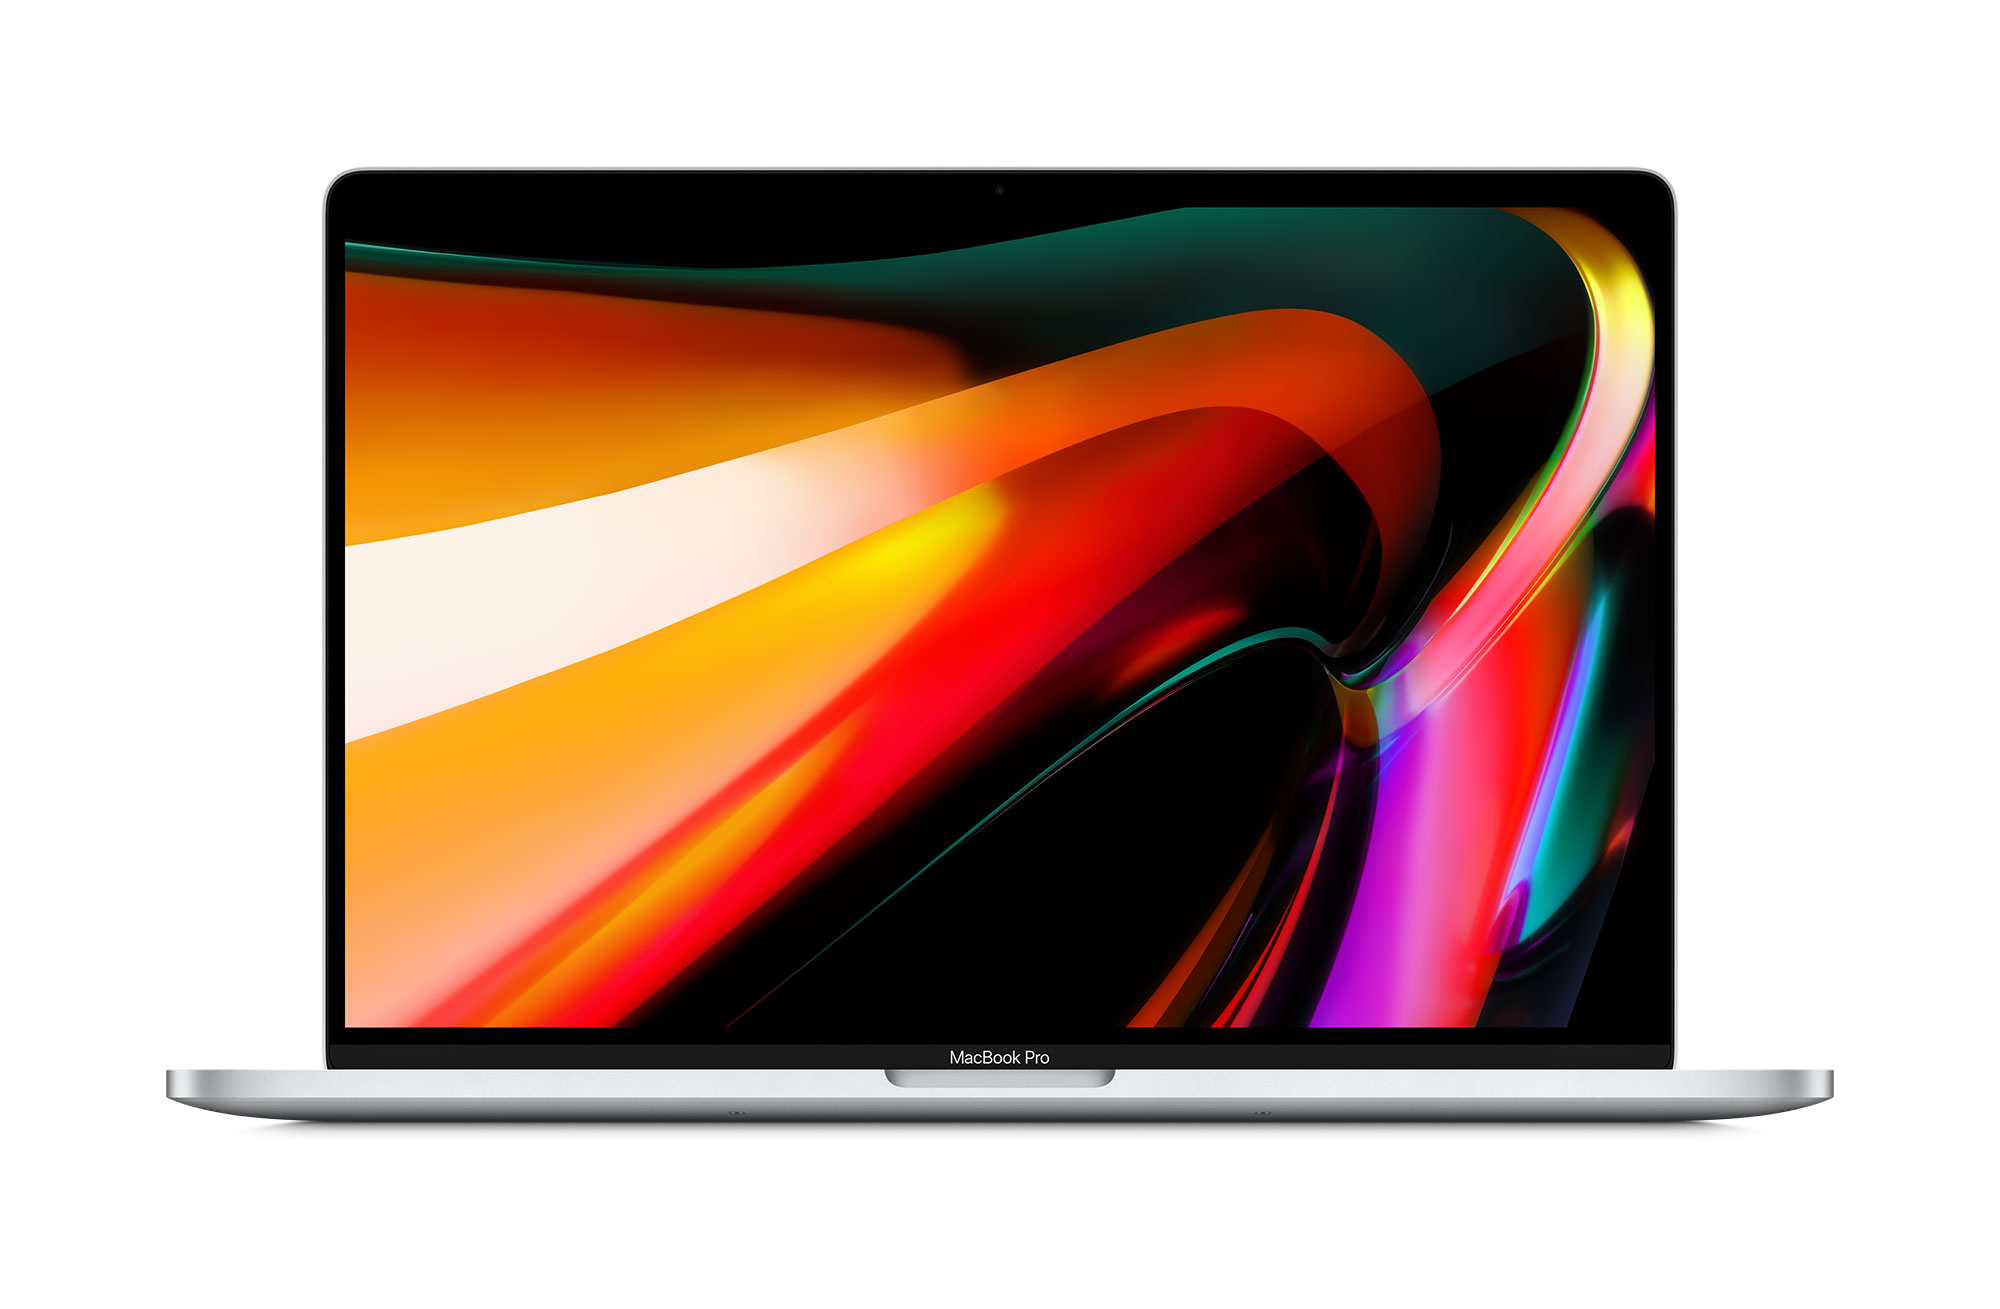 Apple MacBook Pro 40,6cm(16) 2,6GHz i7 TouchBar 512GB Silber (MVVL2D/A)